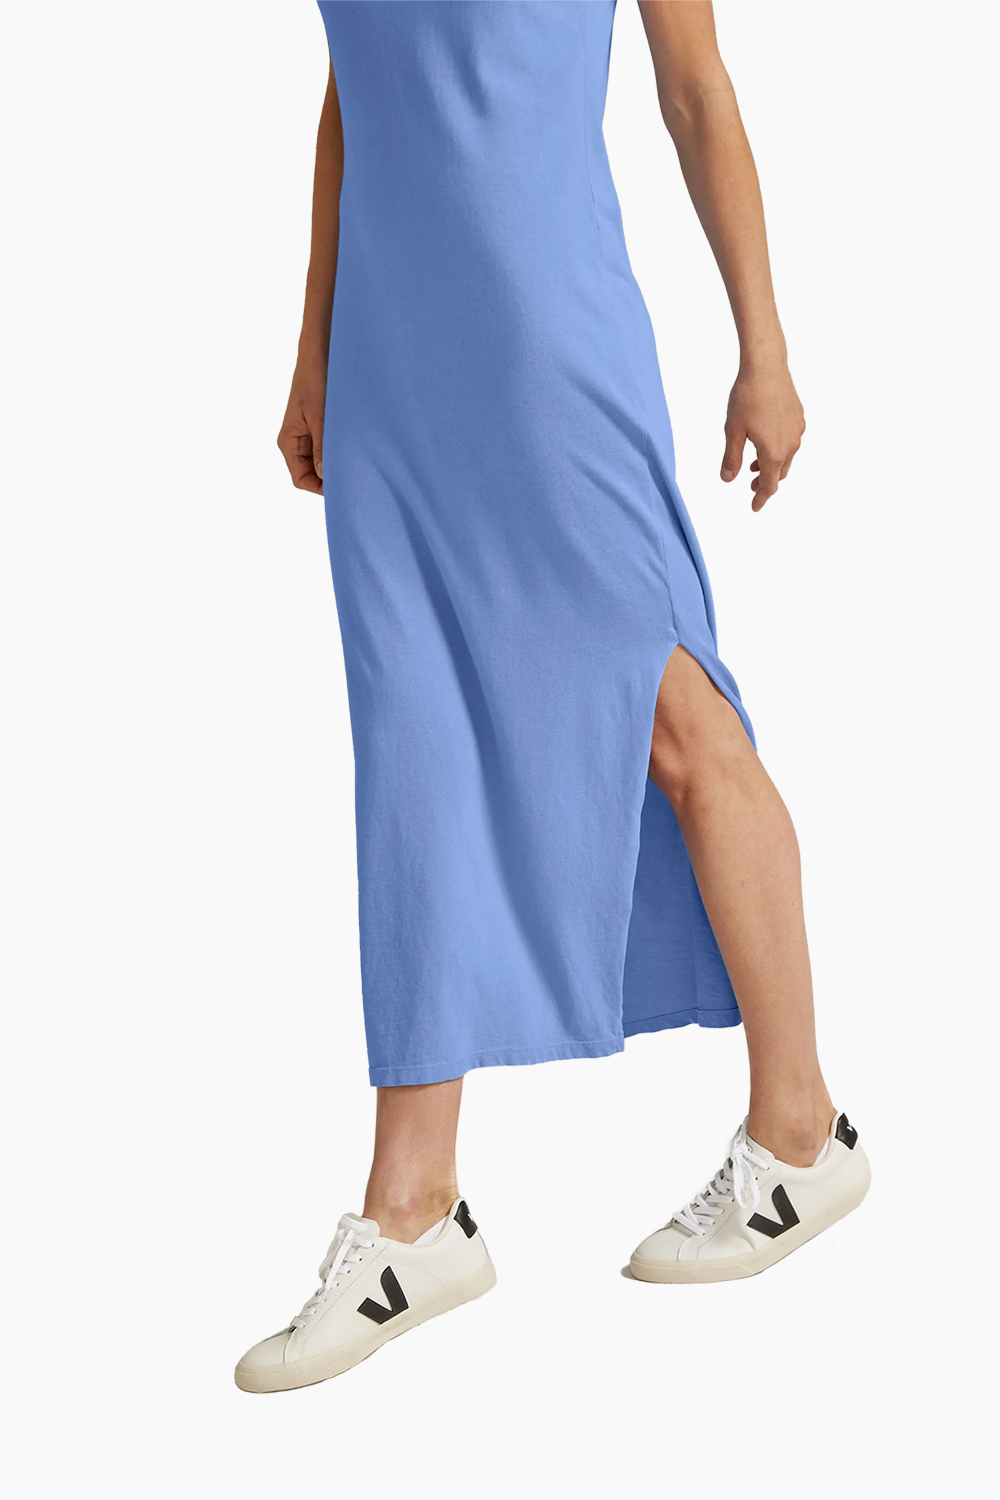 Beyond Yoga Effortless Tank Dress in Washed Flower Blue